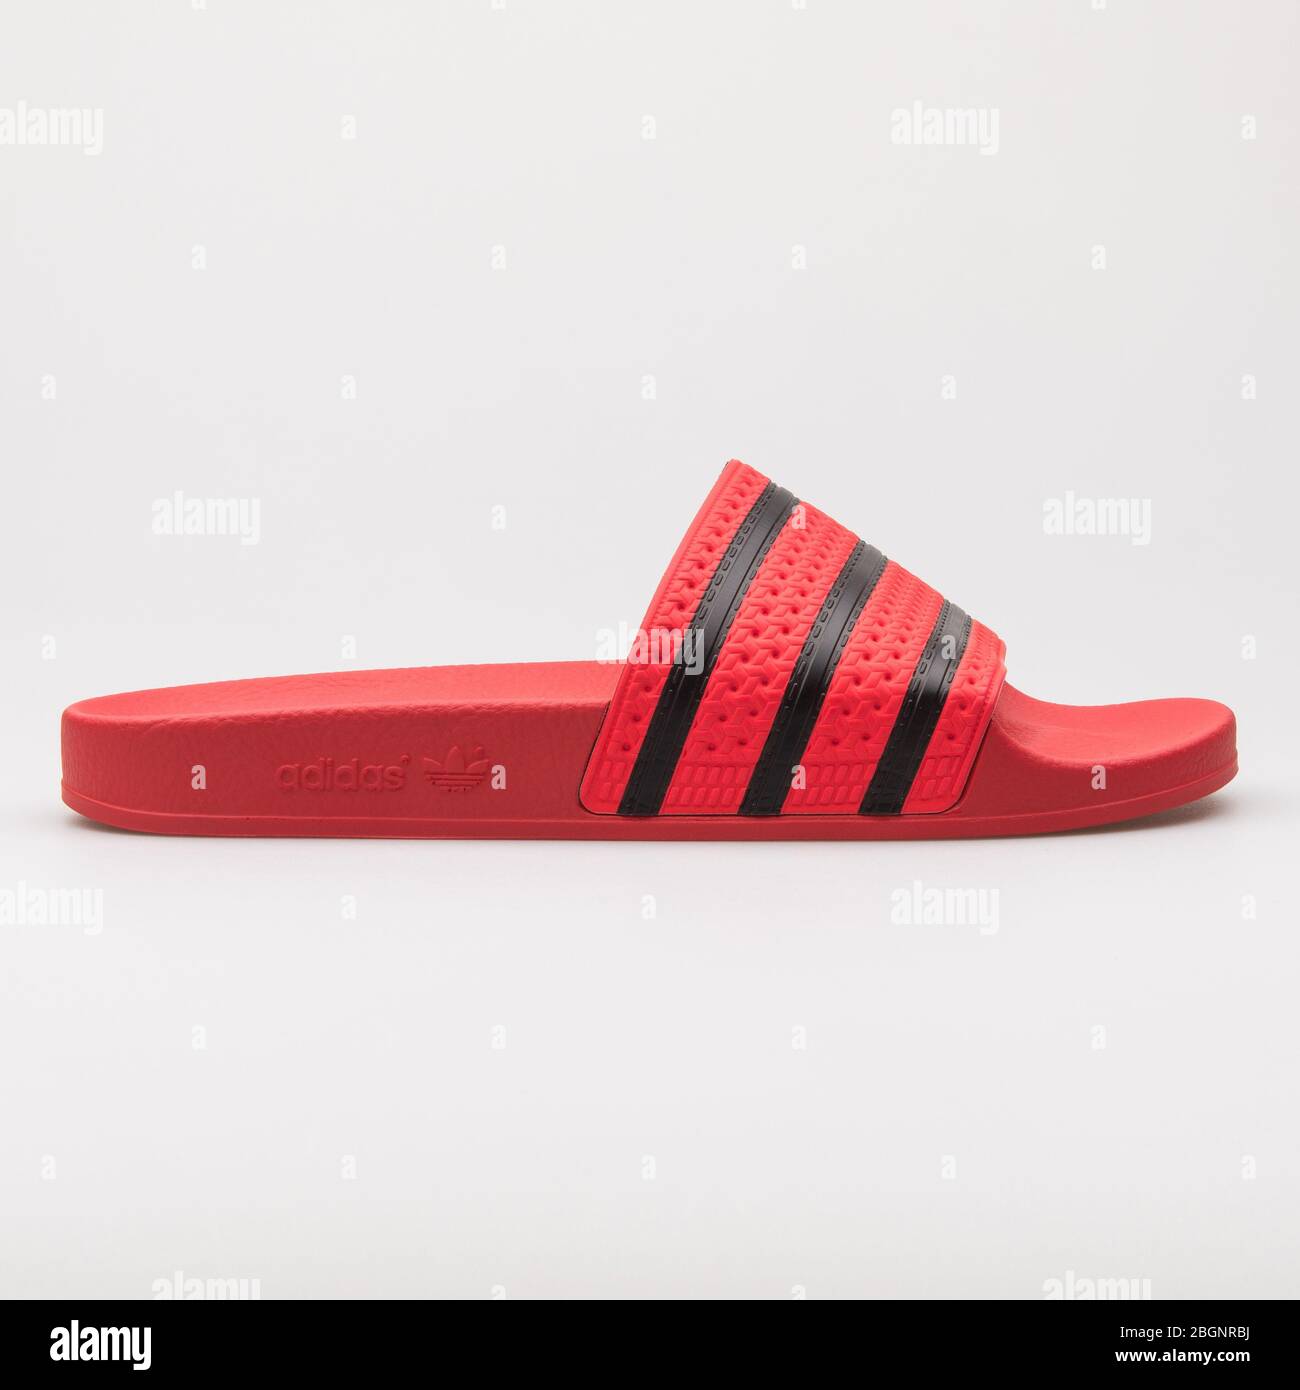 VIENNA, AUSTRIA - AUGUST 24, 2017: Adidas Aqua Slides red and black sandals  on white background Stock Photo - Alamy